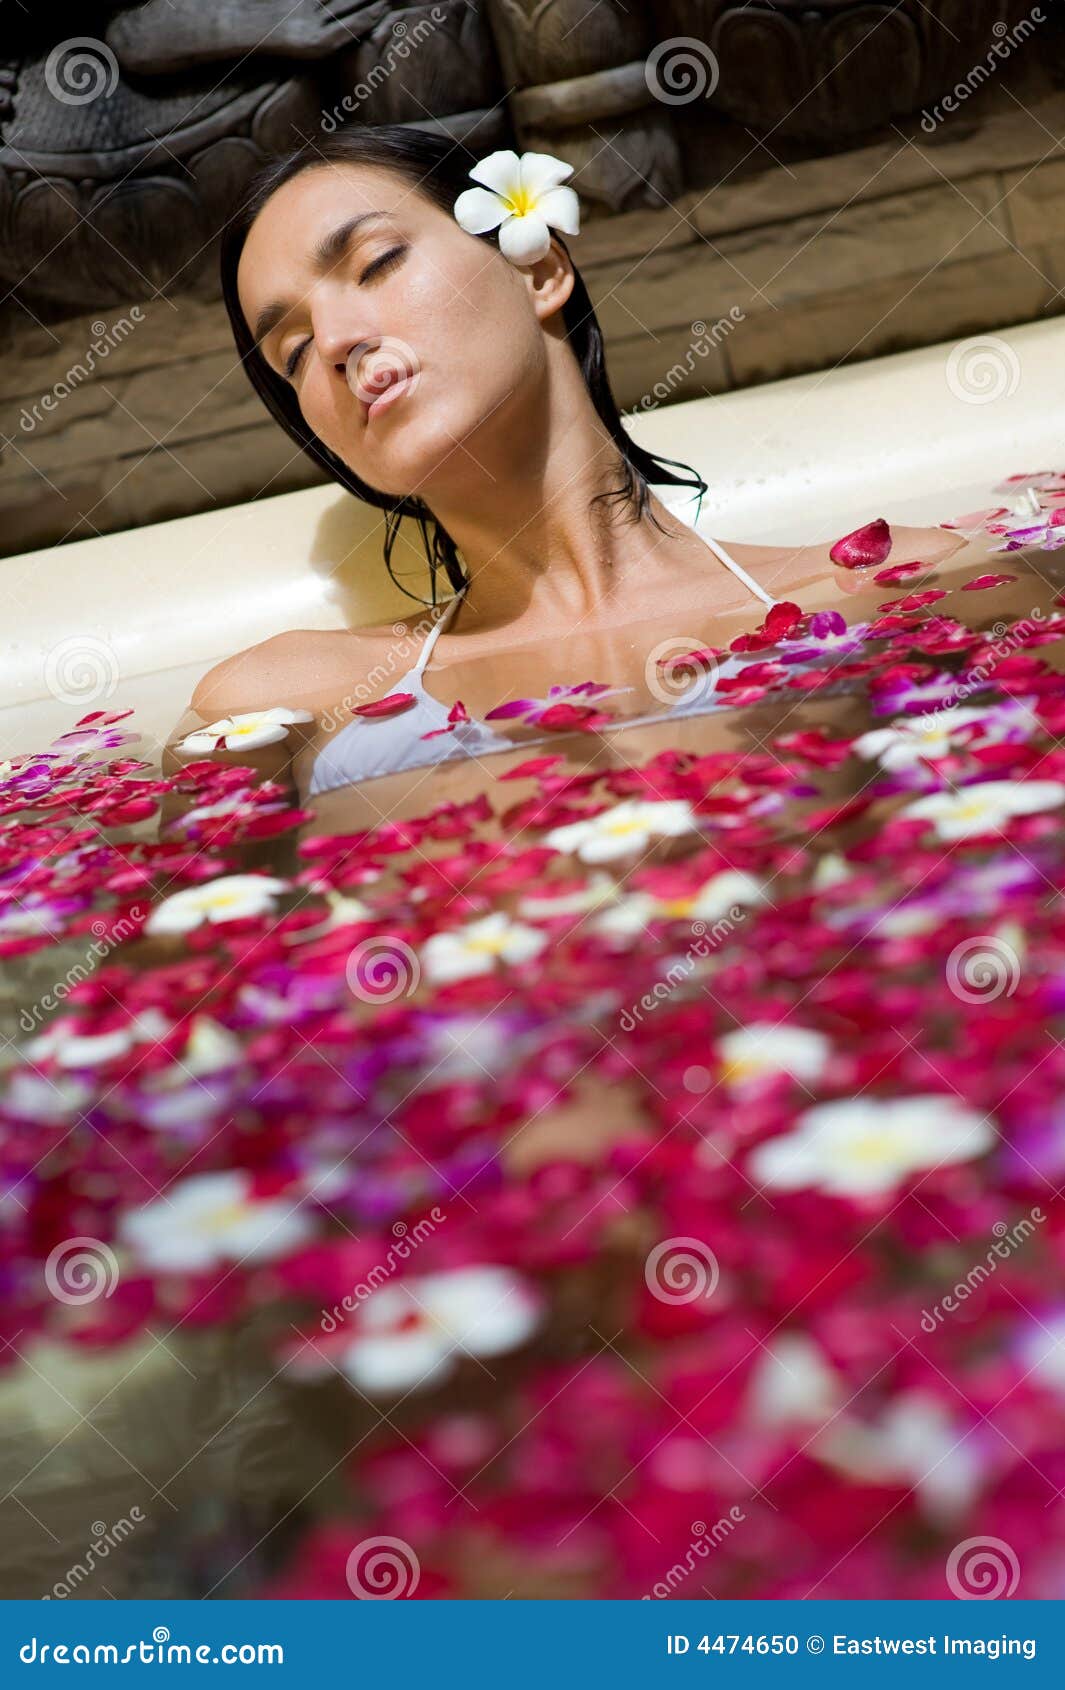 Flower Petal Bath 